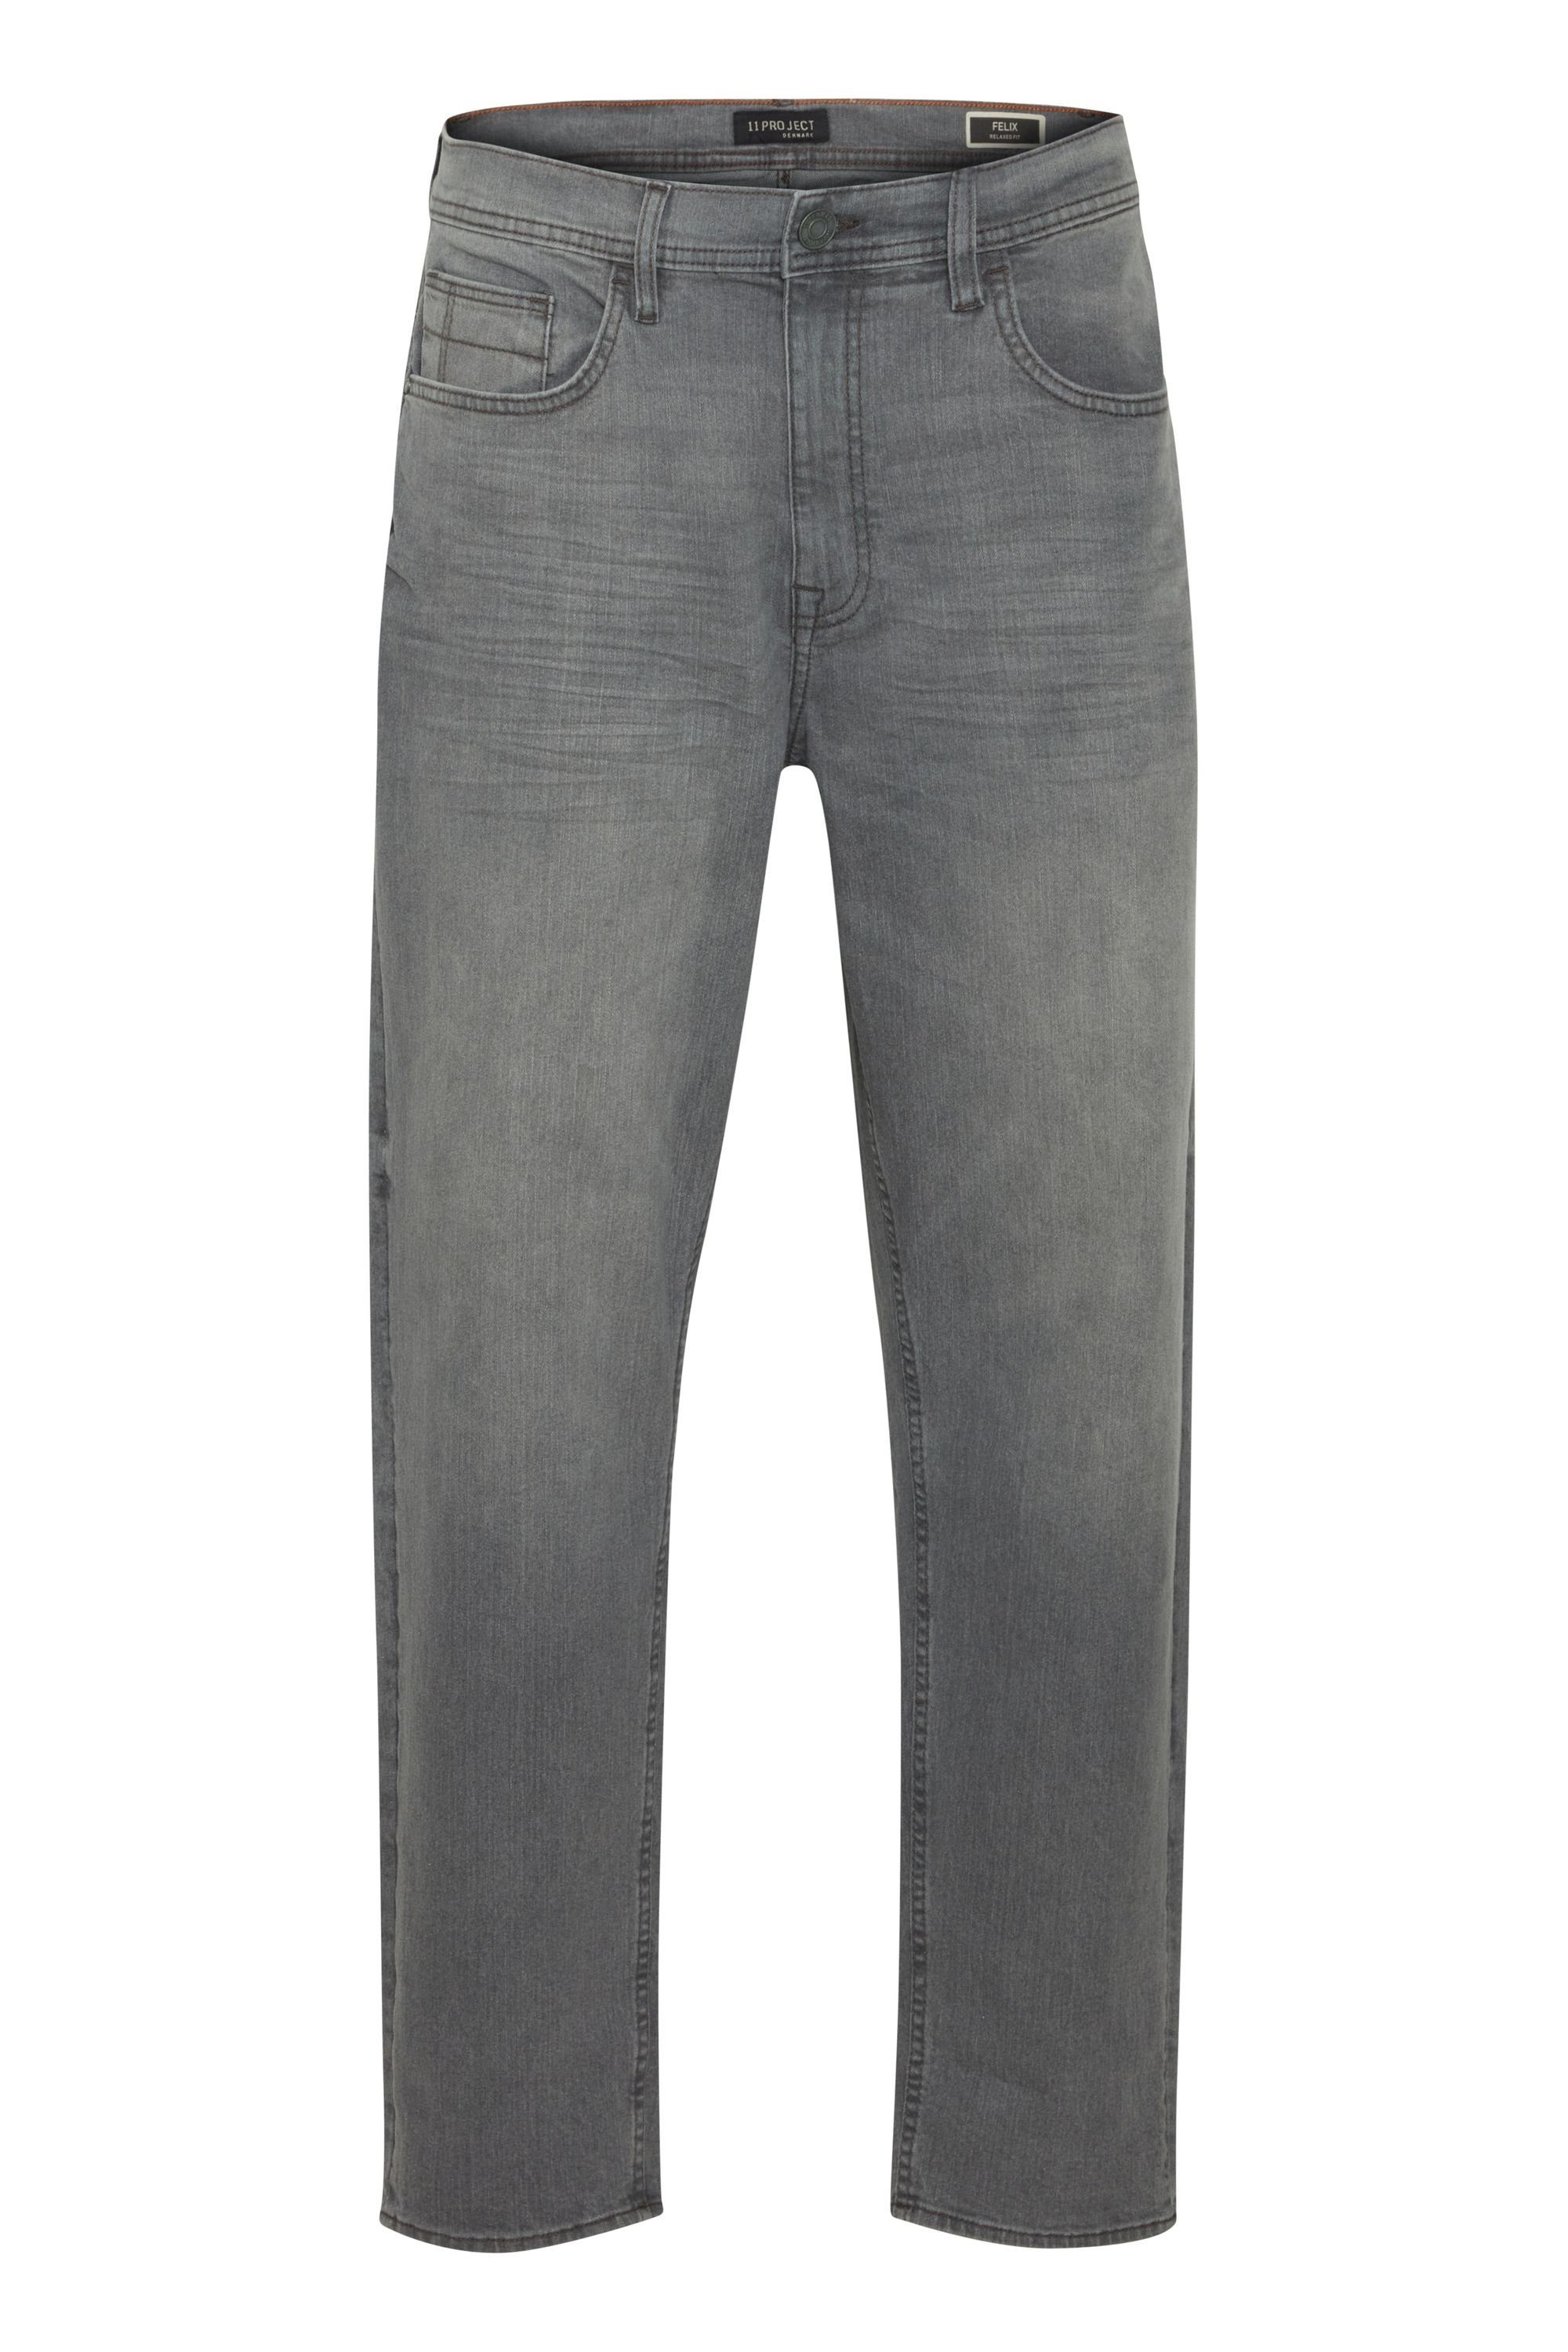 11 Project 5-Pocket-Jeans 11 Project grey Denim PRMads